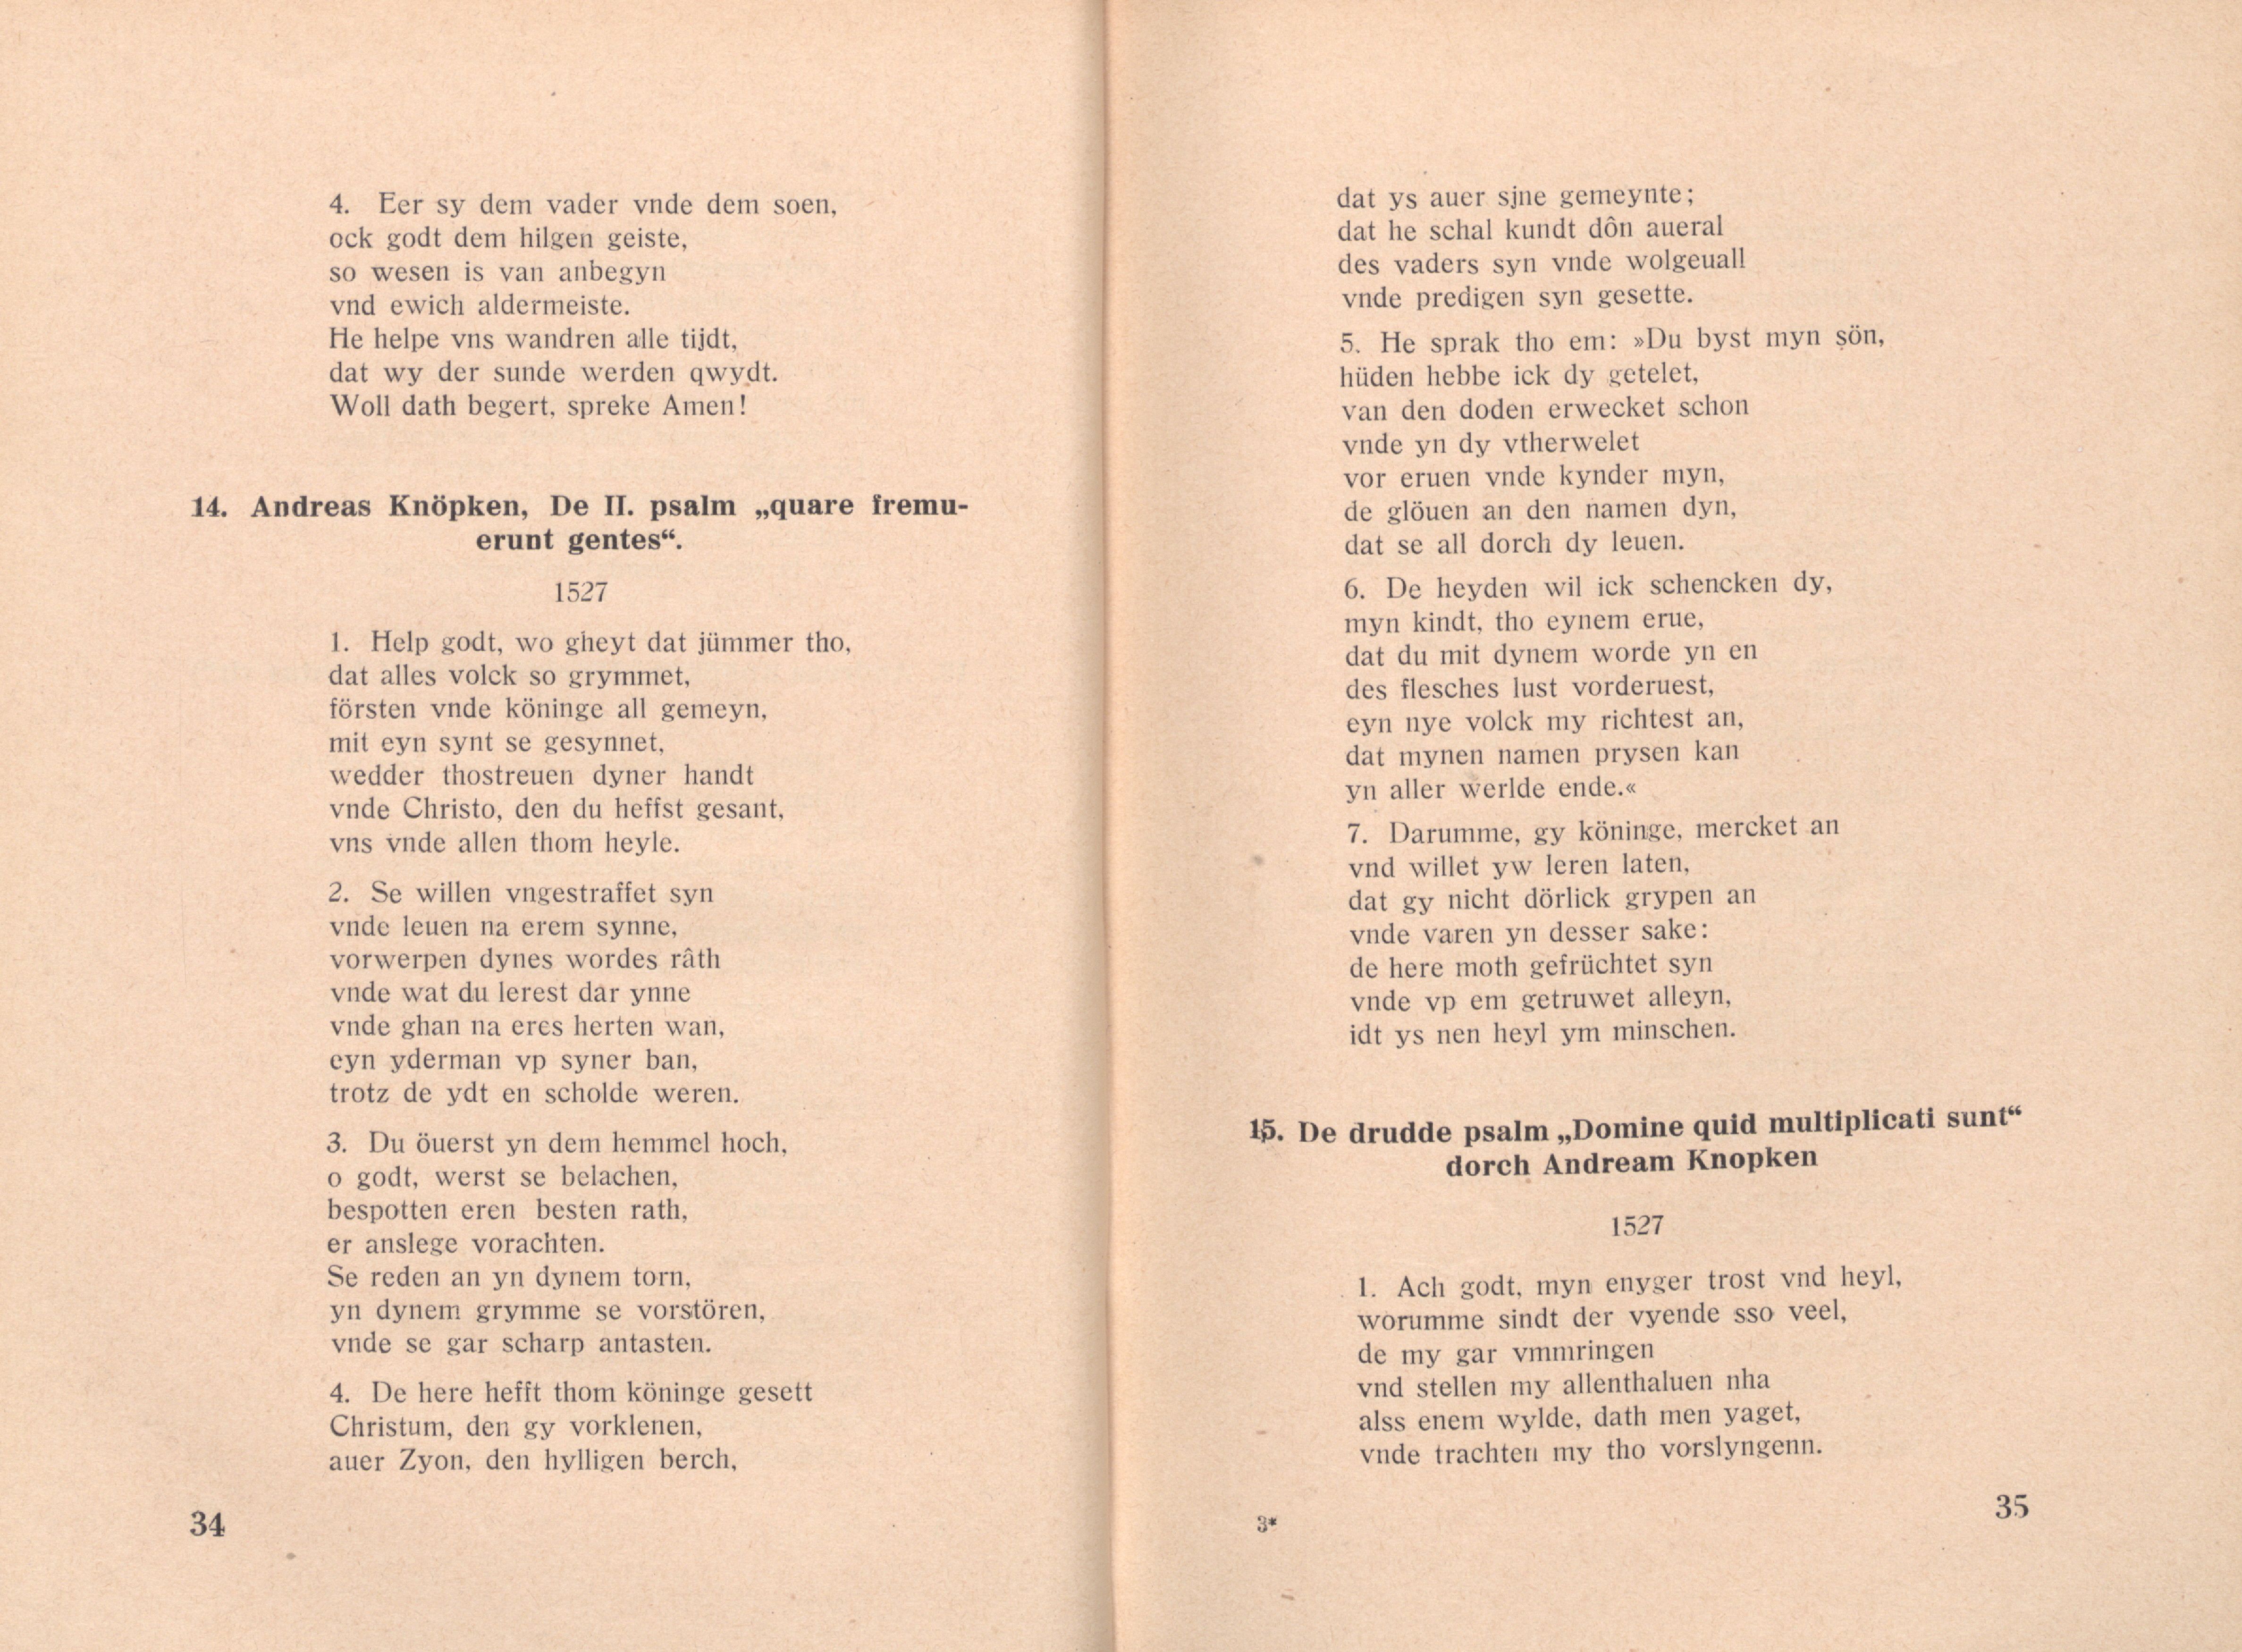 De drudde psalm "Domine quid multiplicati sunt" dorch Andream Knopken (1527) | 1. (34-35) Main body of text